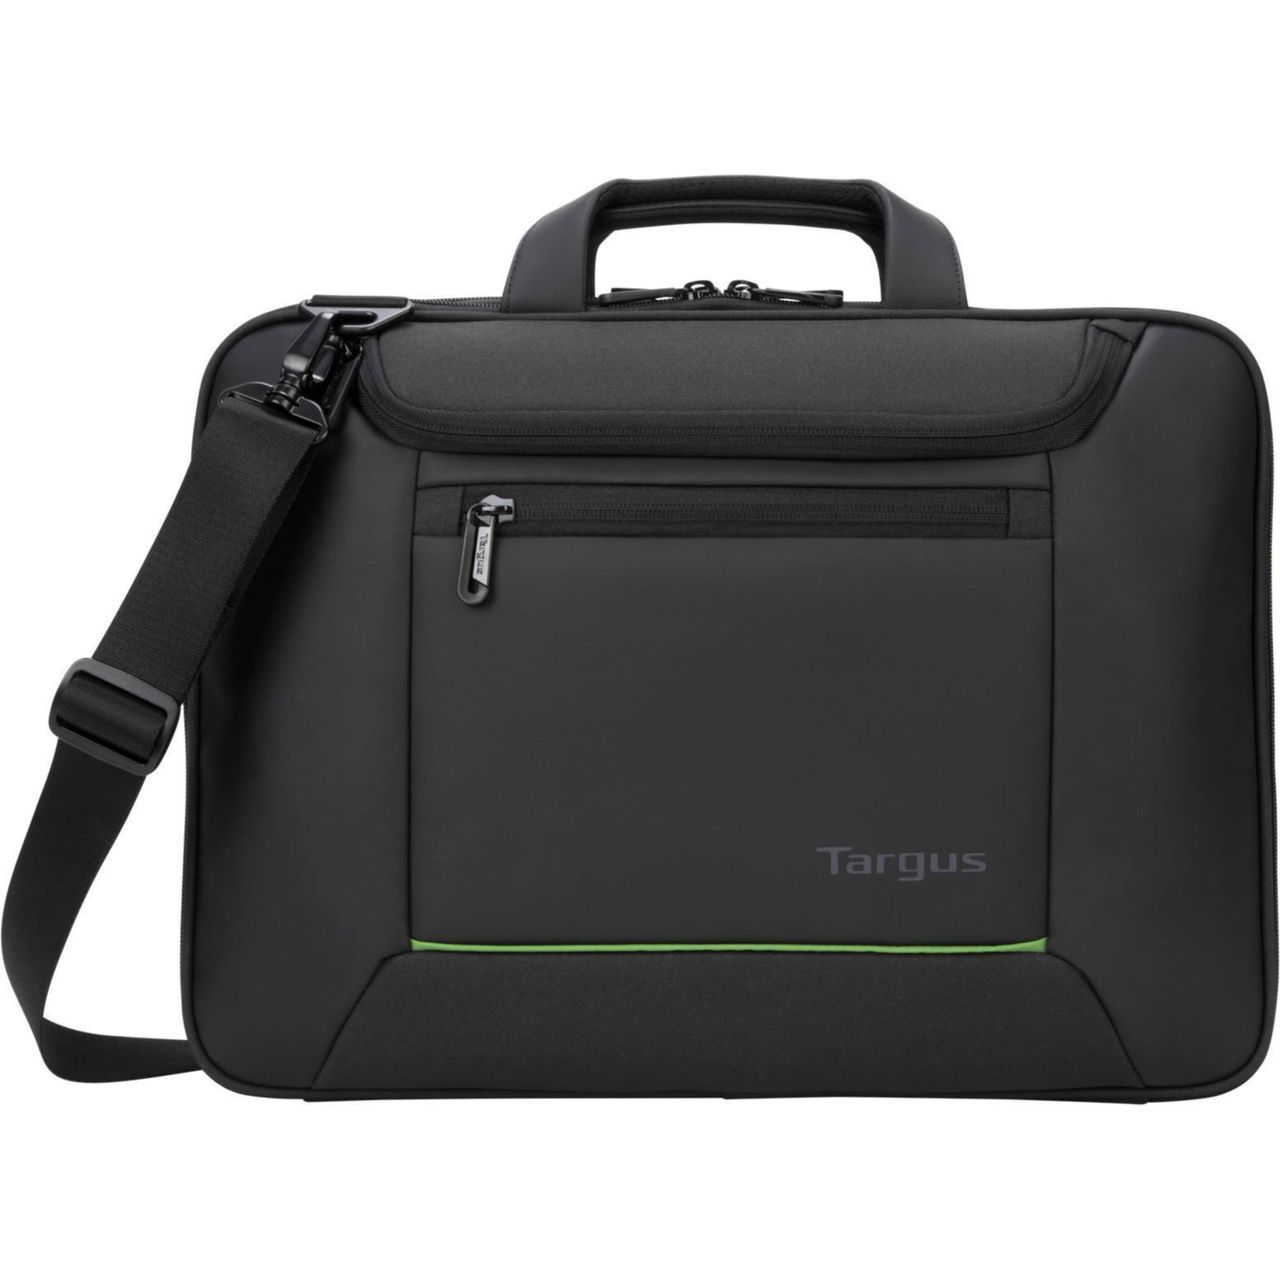 Targus Topload Laptop Case for 15.6